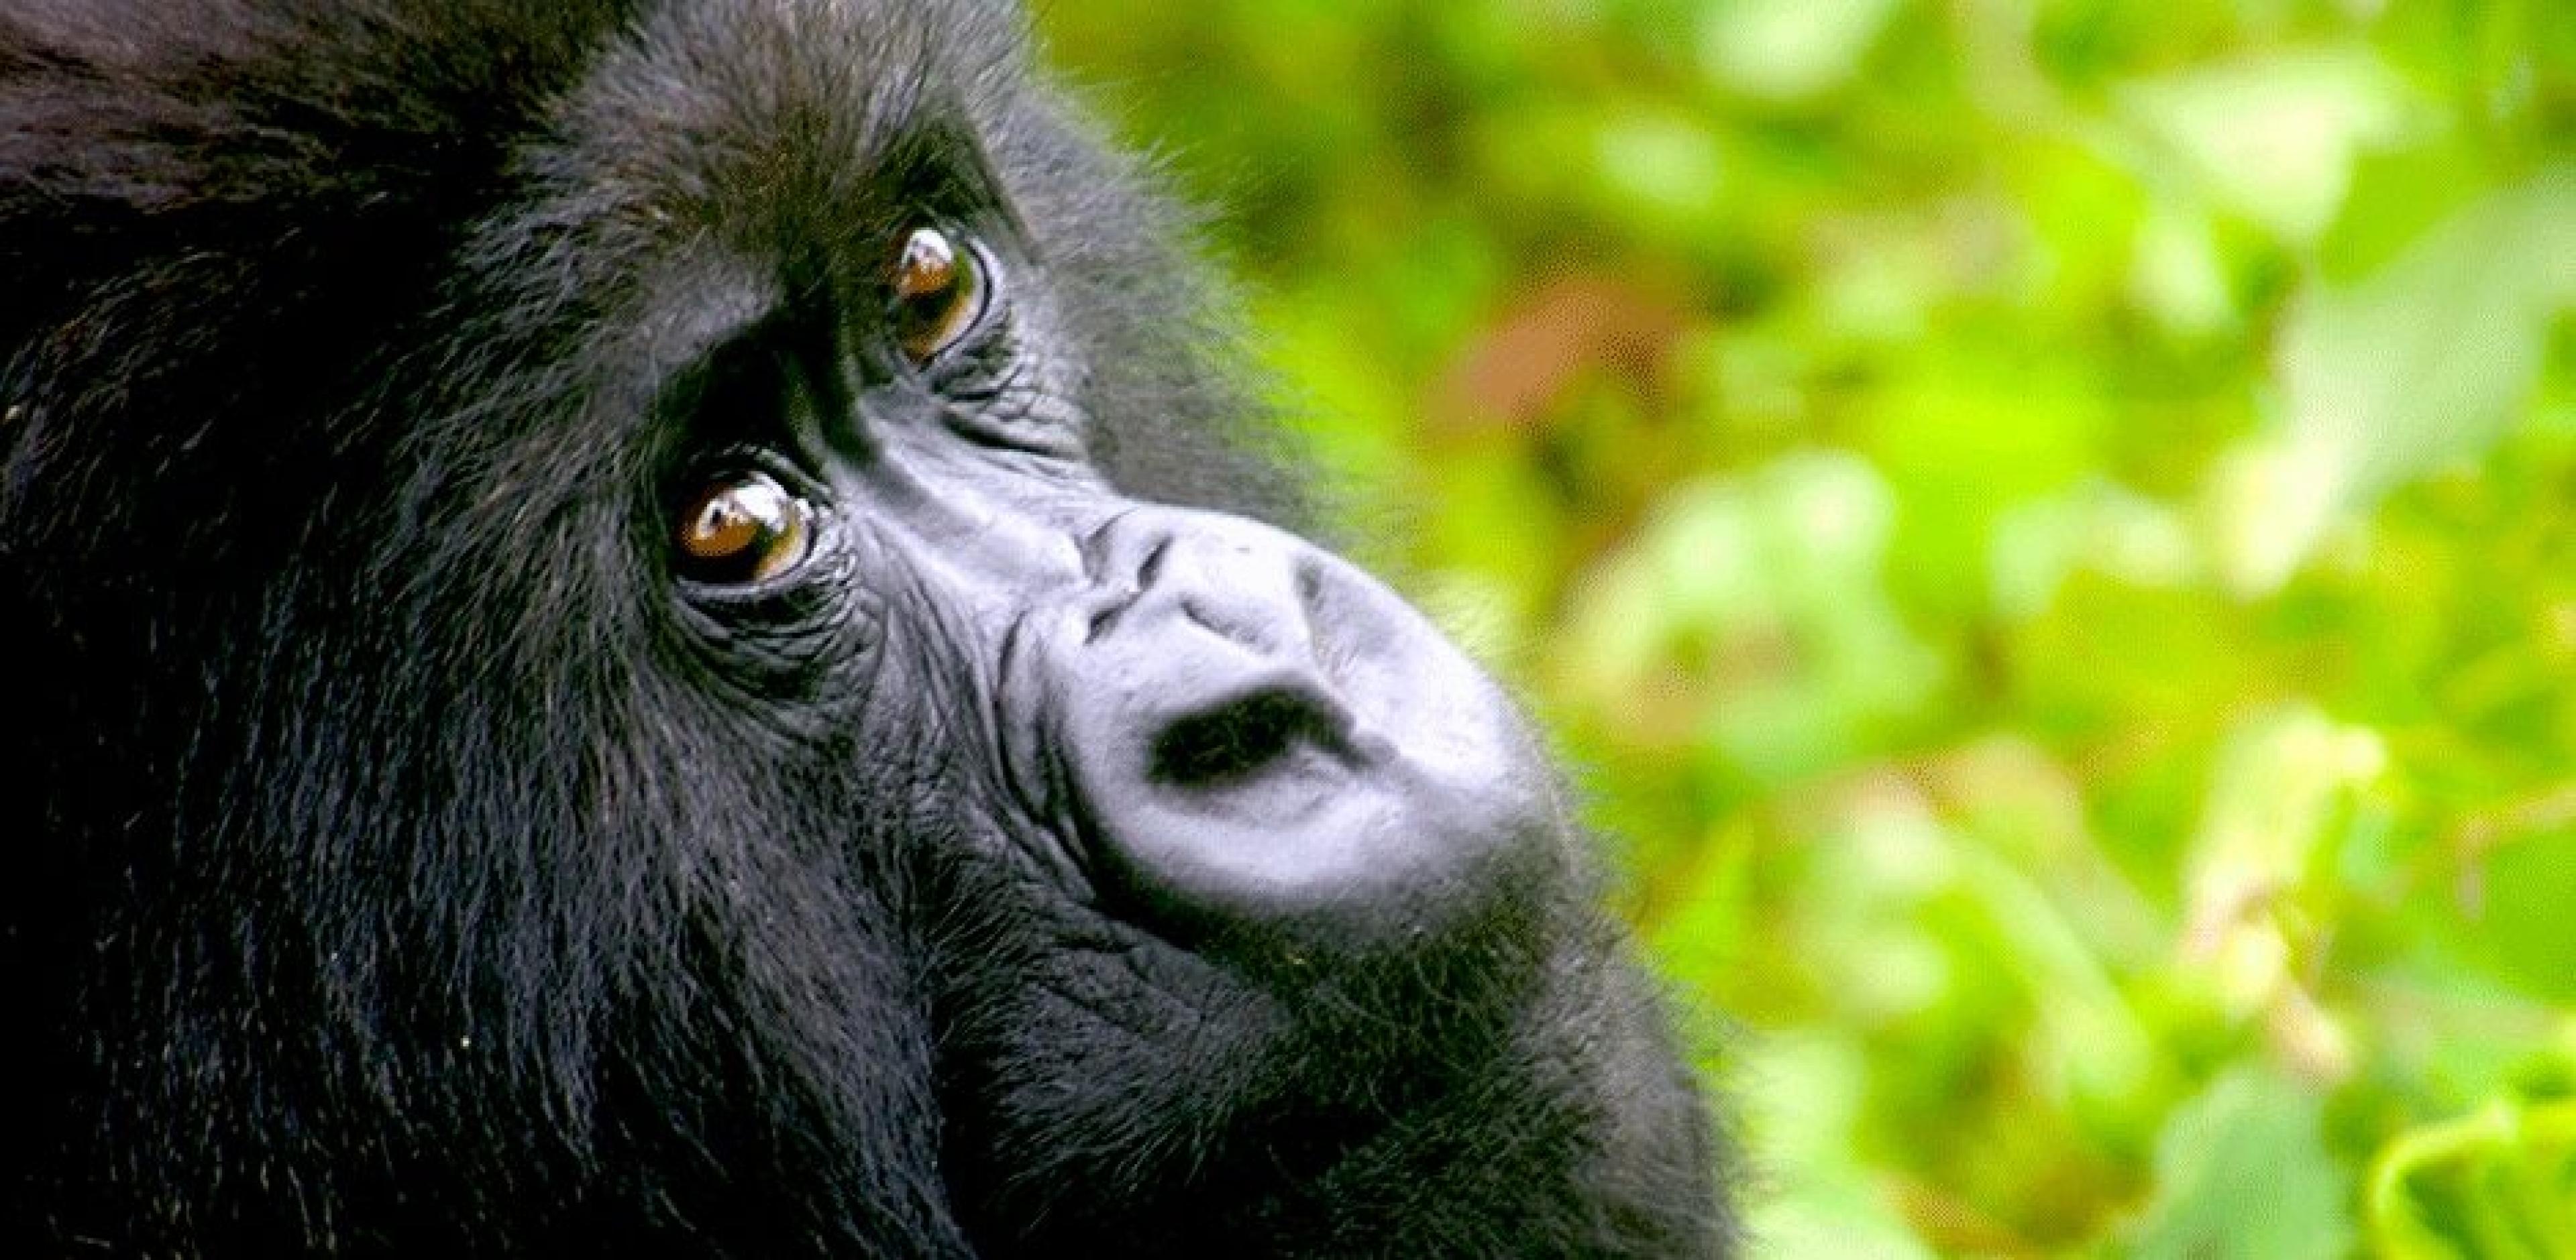 A gorilla in Rwanda's Volcanoes National Park.